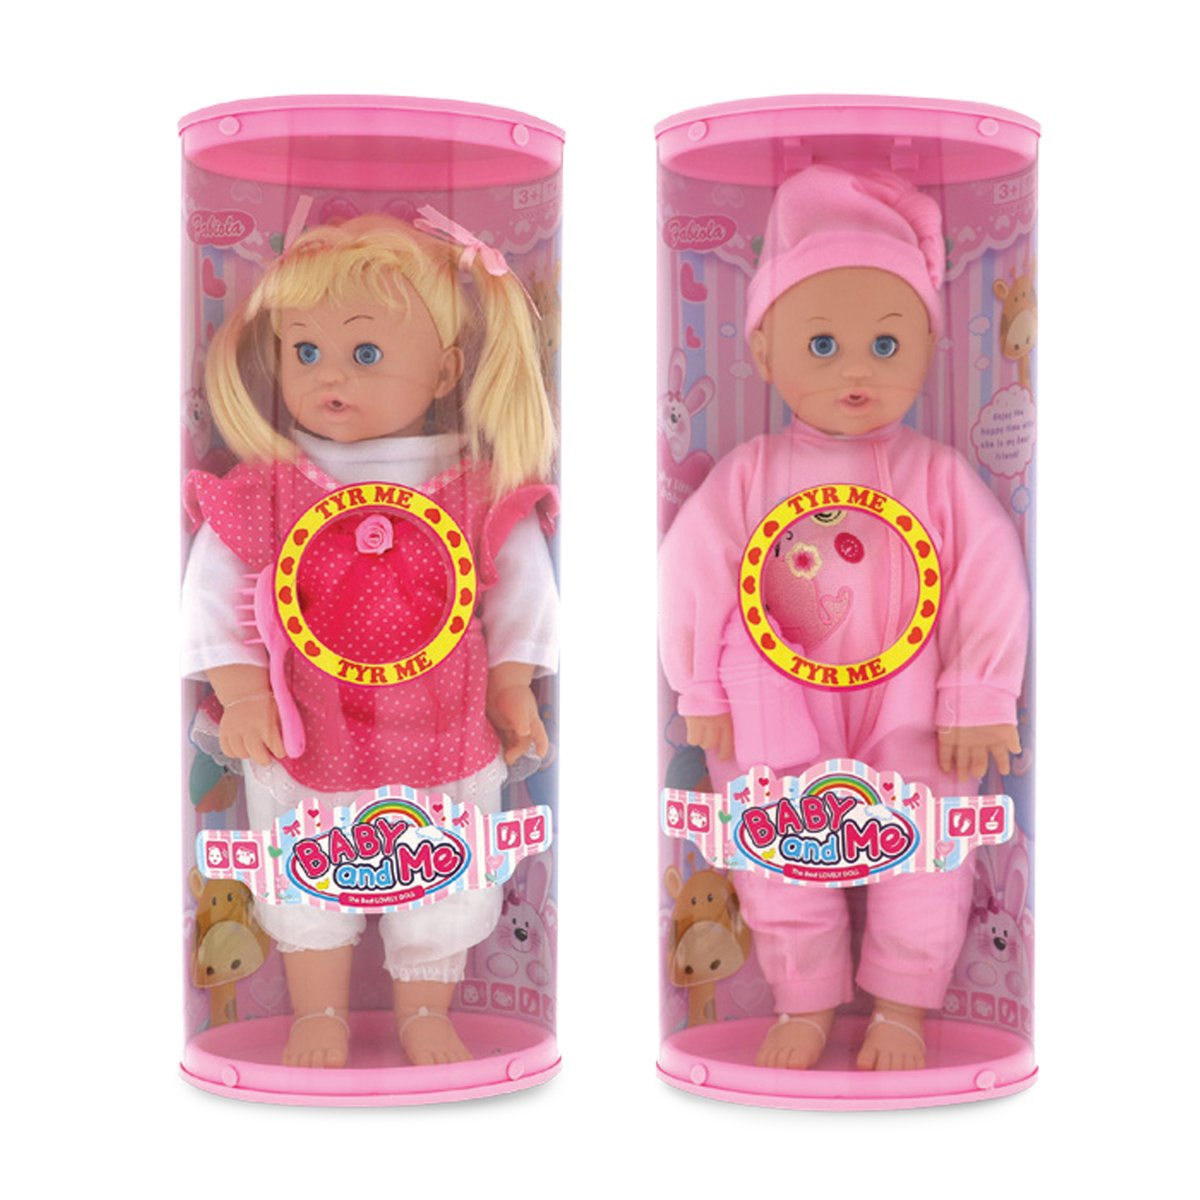 Fabiola Baby Doll Assorted per pc 50cm